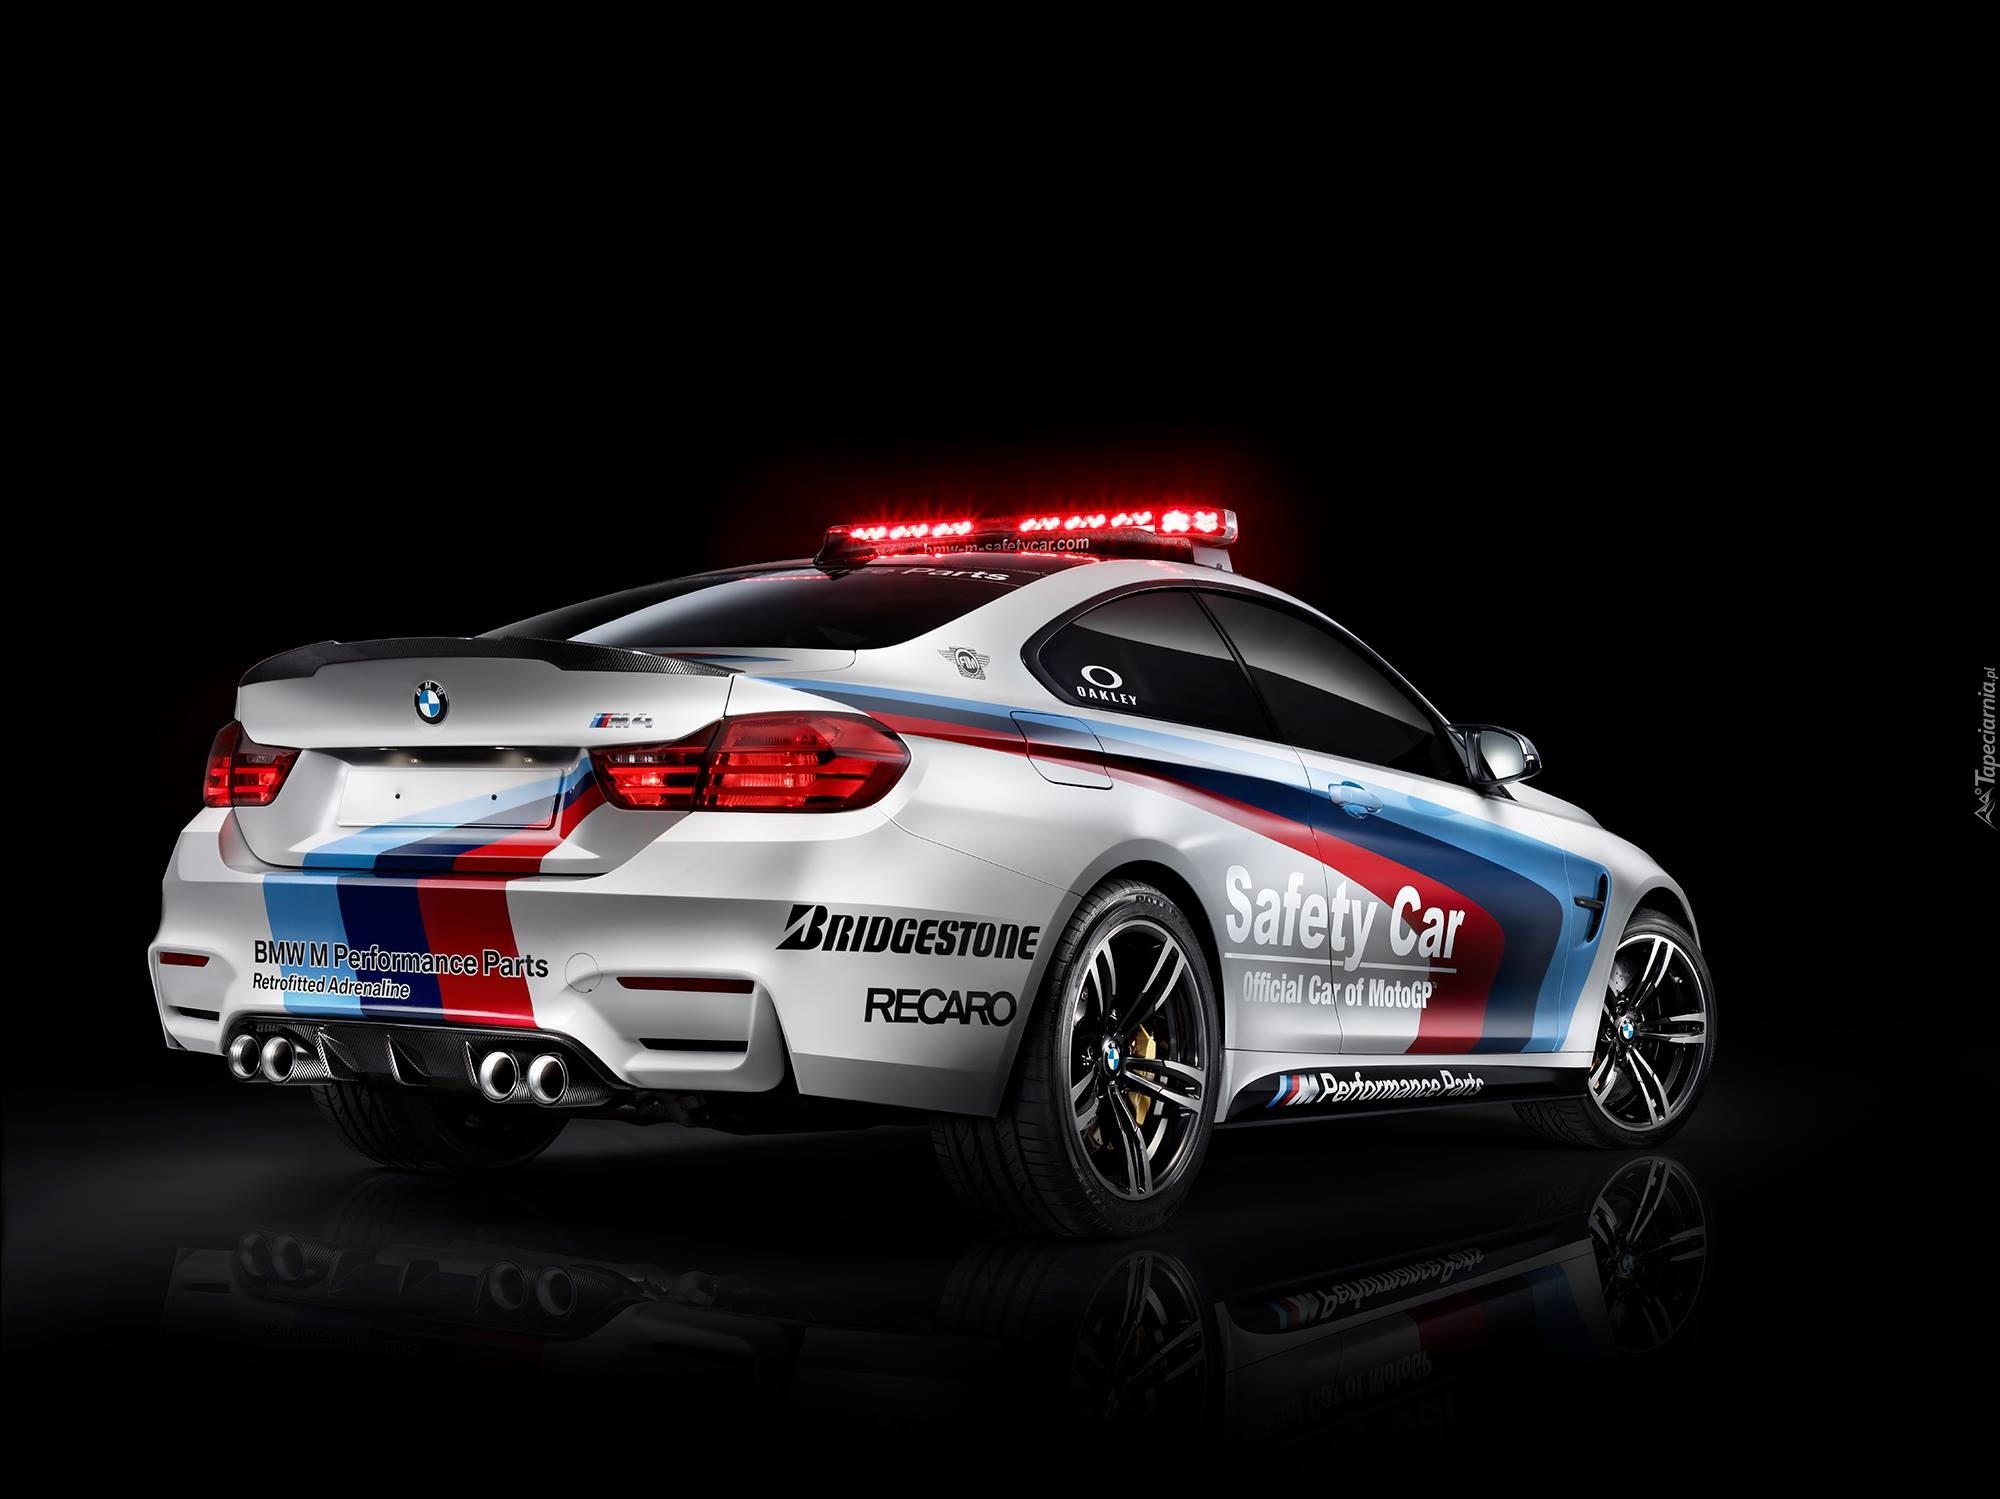 BMW M4, Coupe, MotoGP, Safety Car